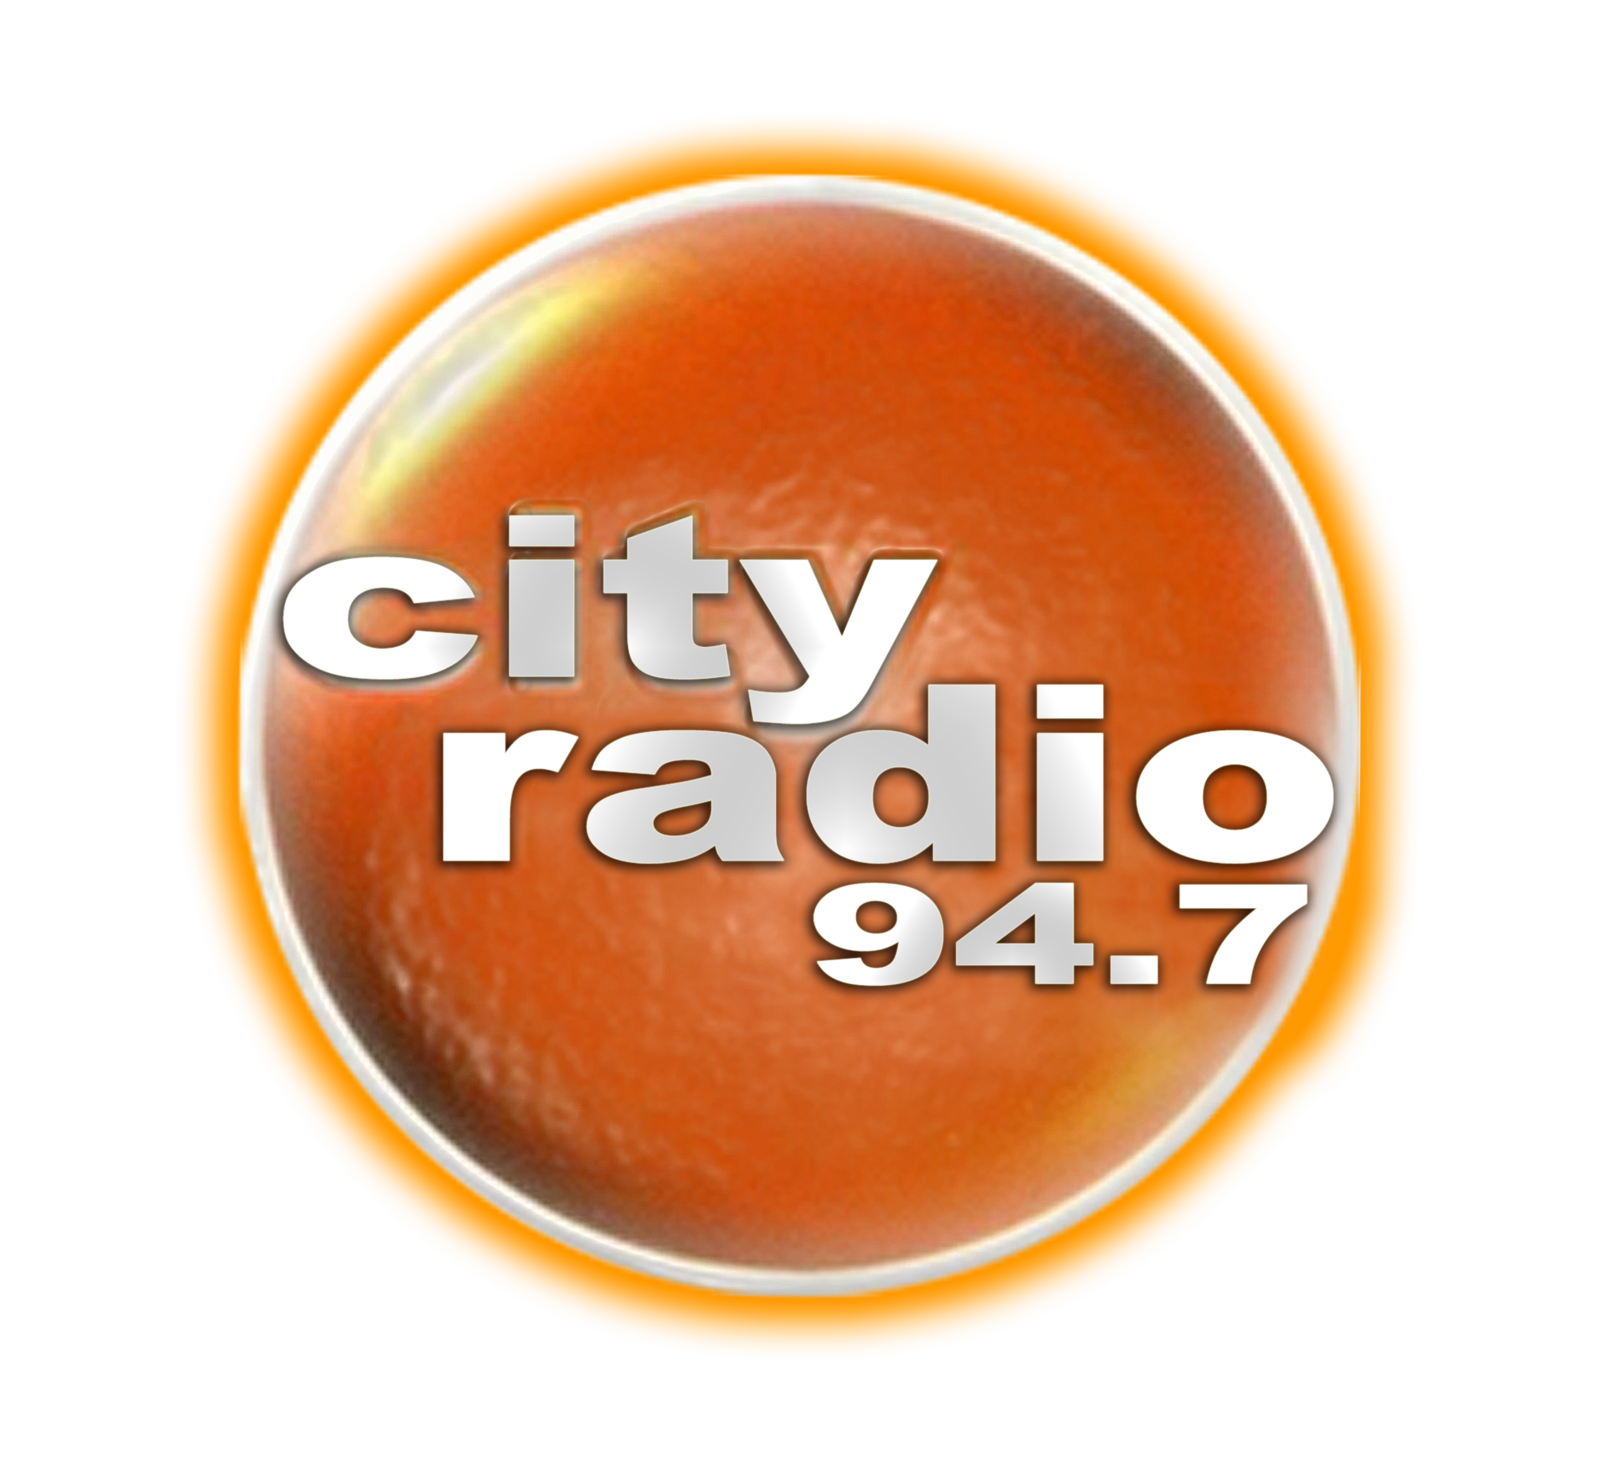 CITY RADIO 94.7